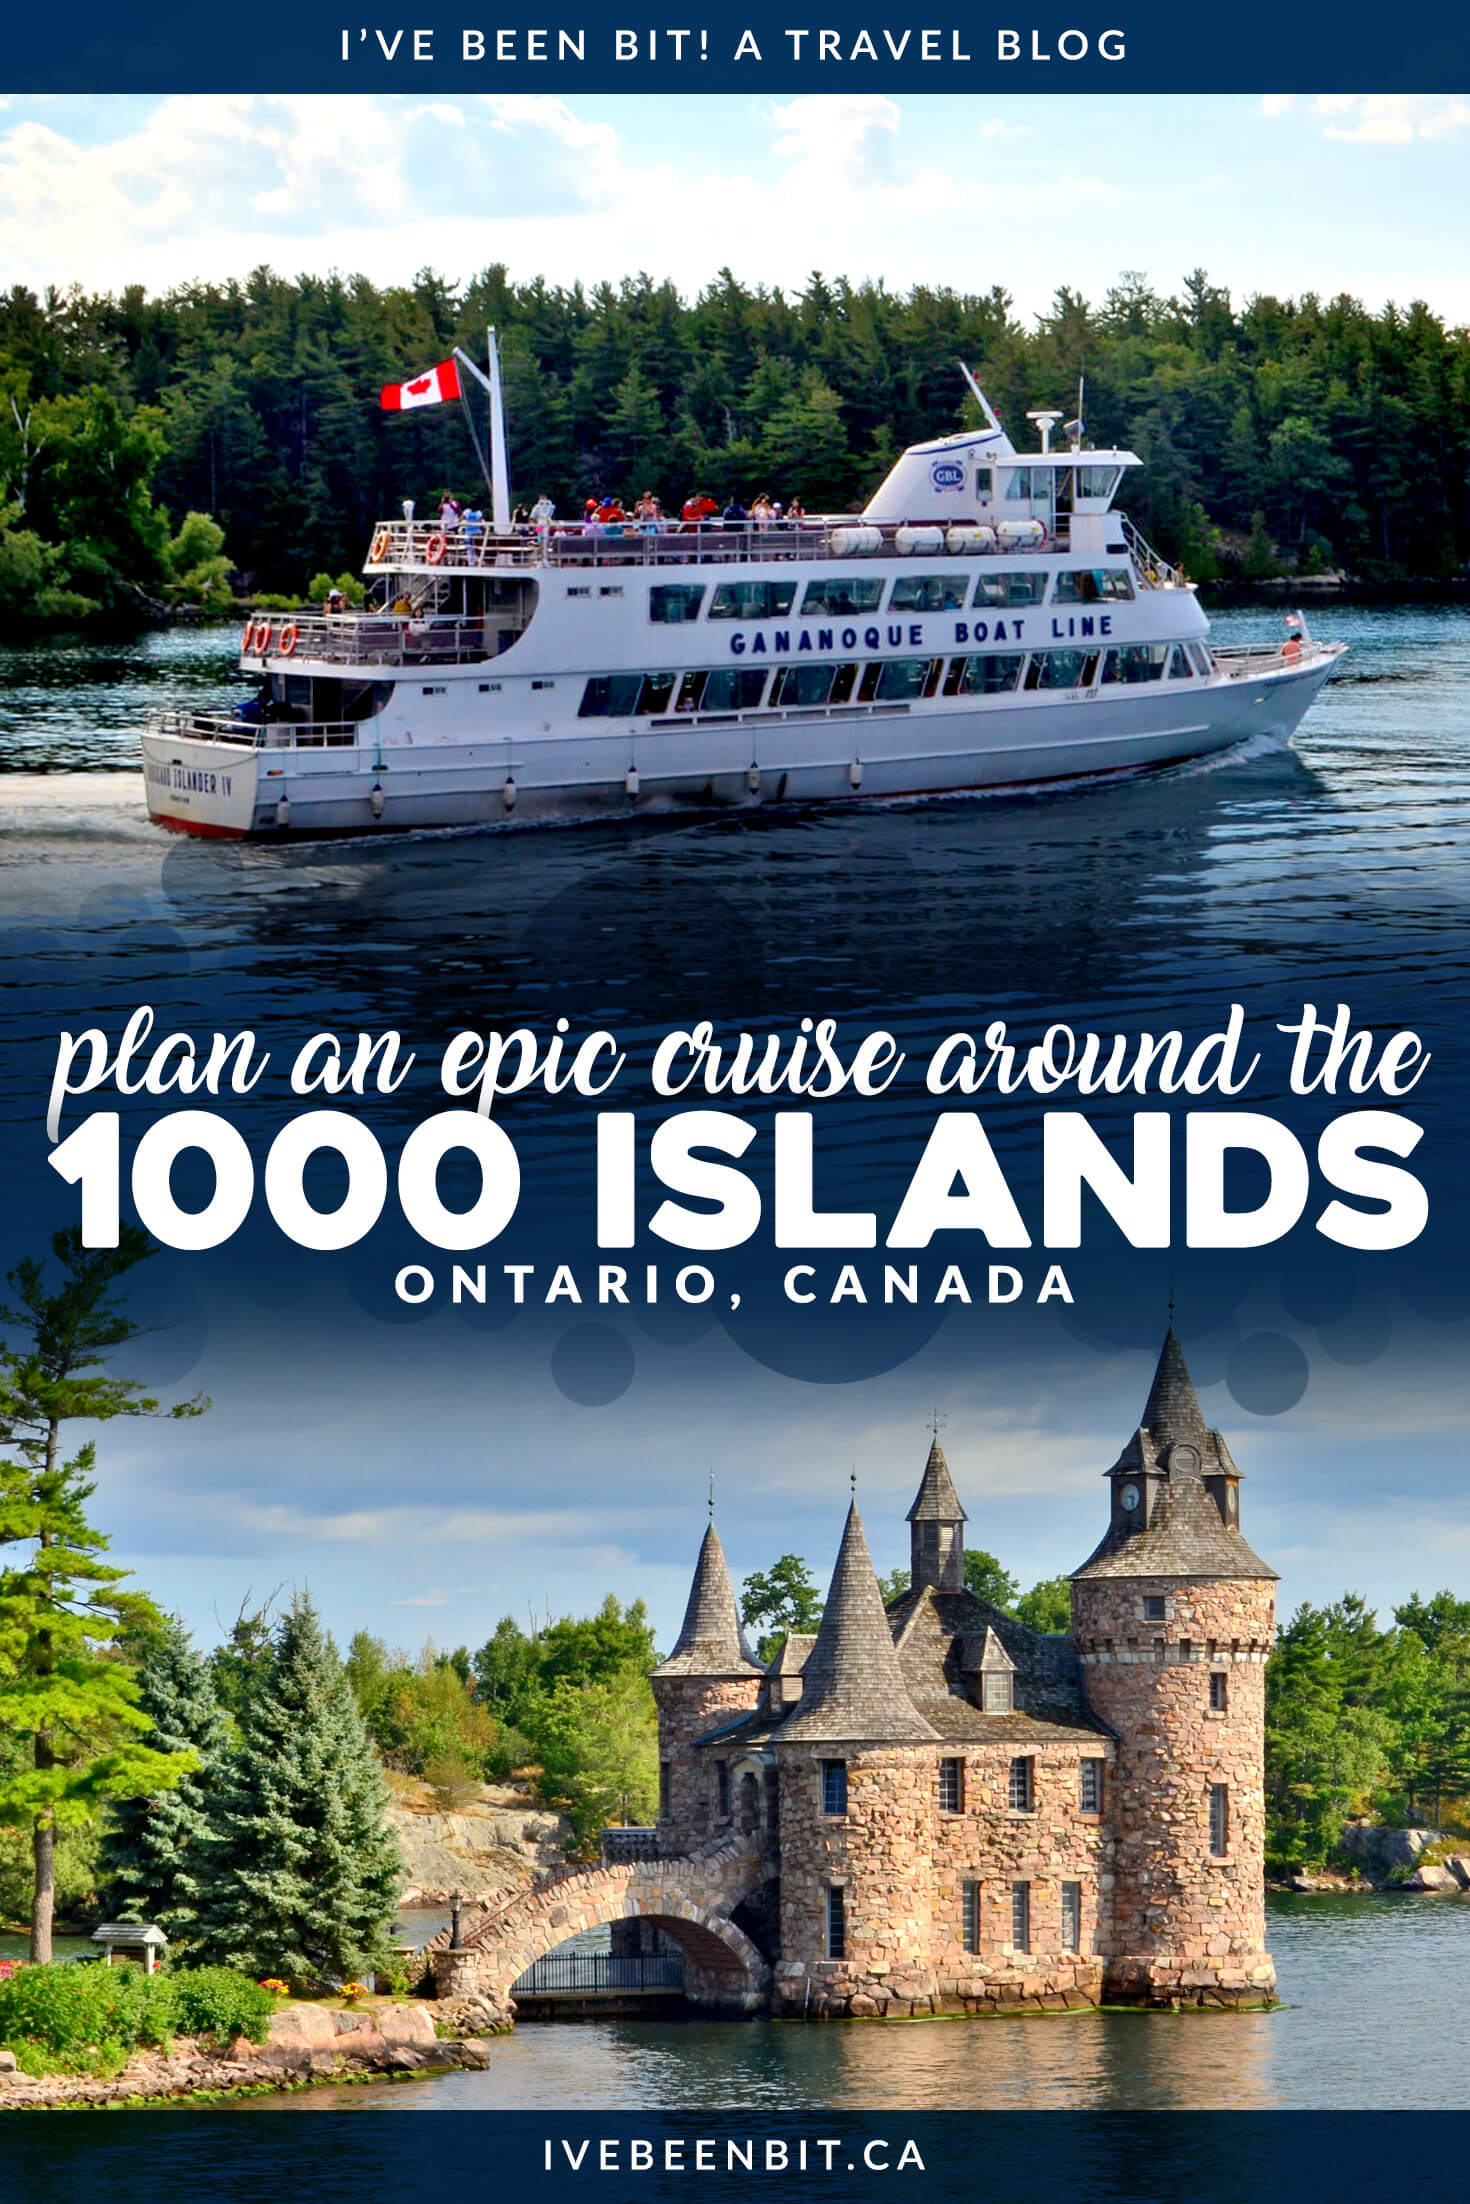 1000 islands sightseeing cruise